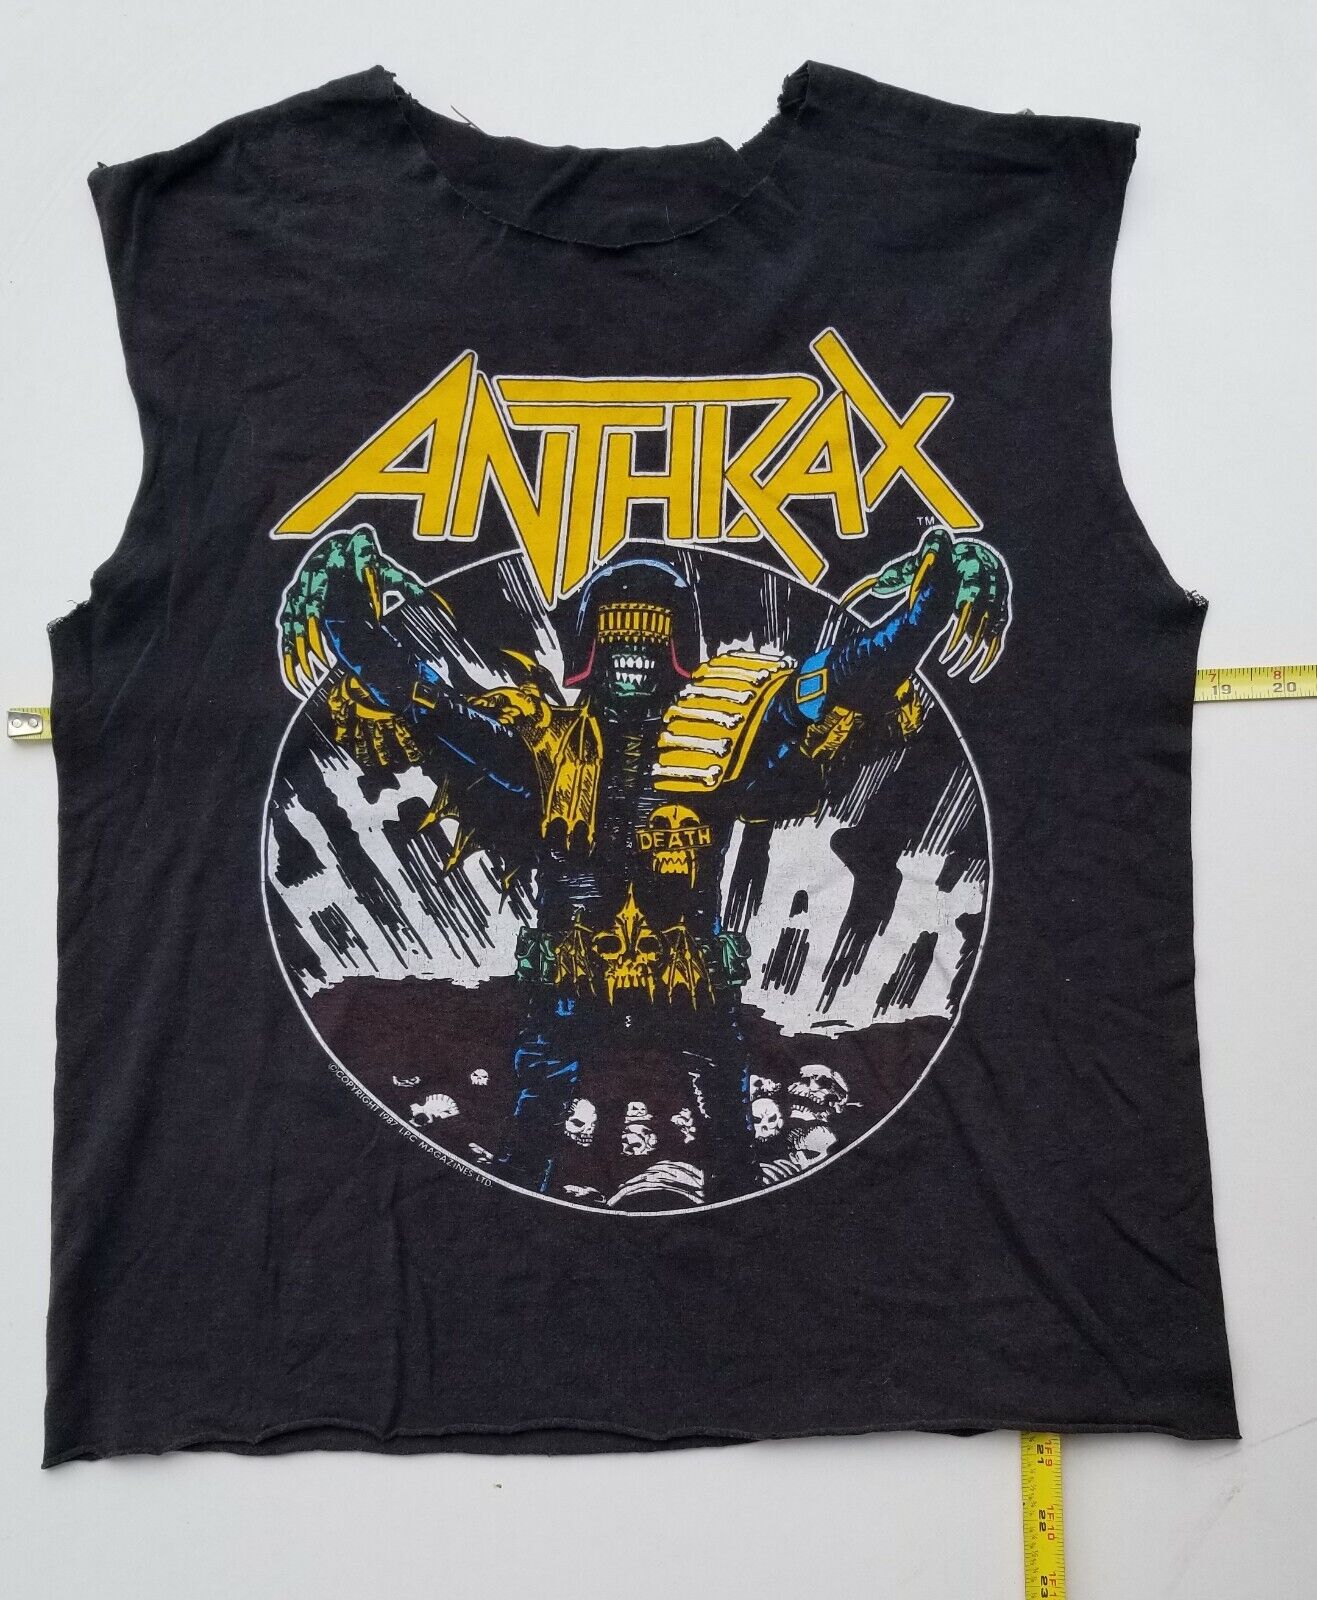 Anthrax  Vtg Among the Living  tour shirt  NOT  a  reprint. SLAYER  Iron Maiden